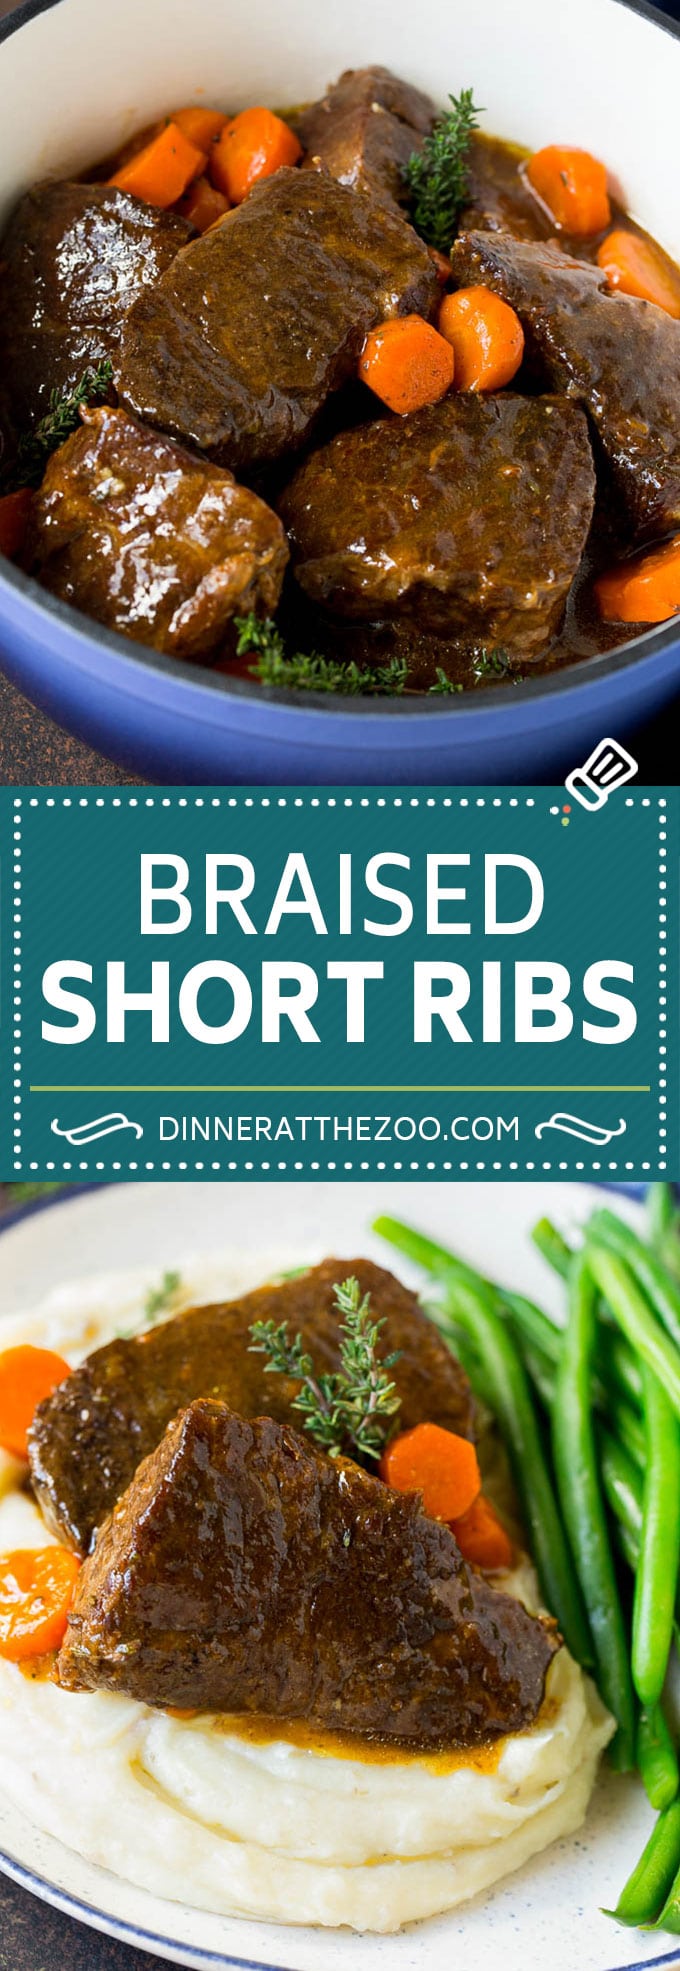 Braised Short Ribs Recipe #beef #dinner #dinneratthezoo